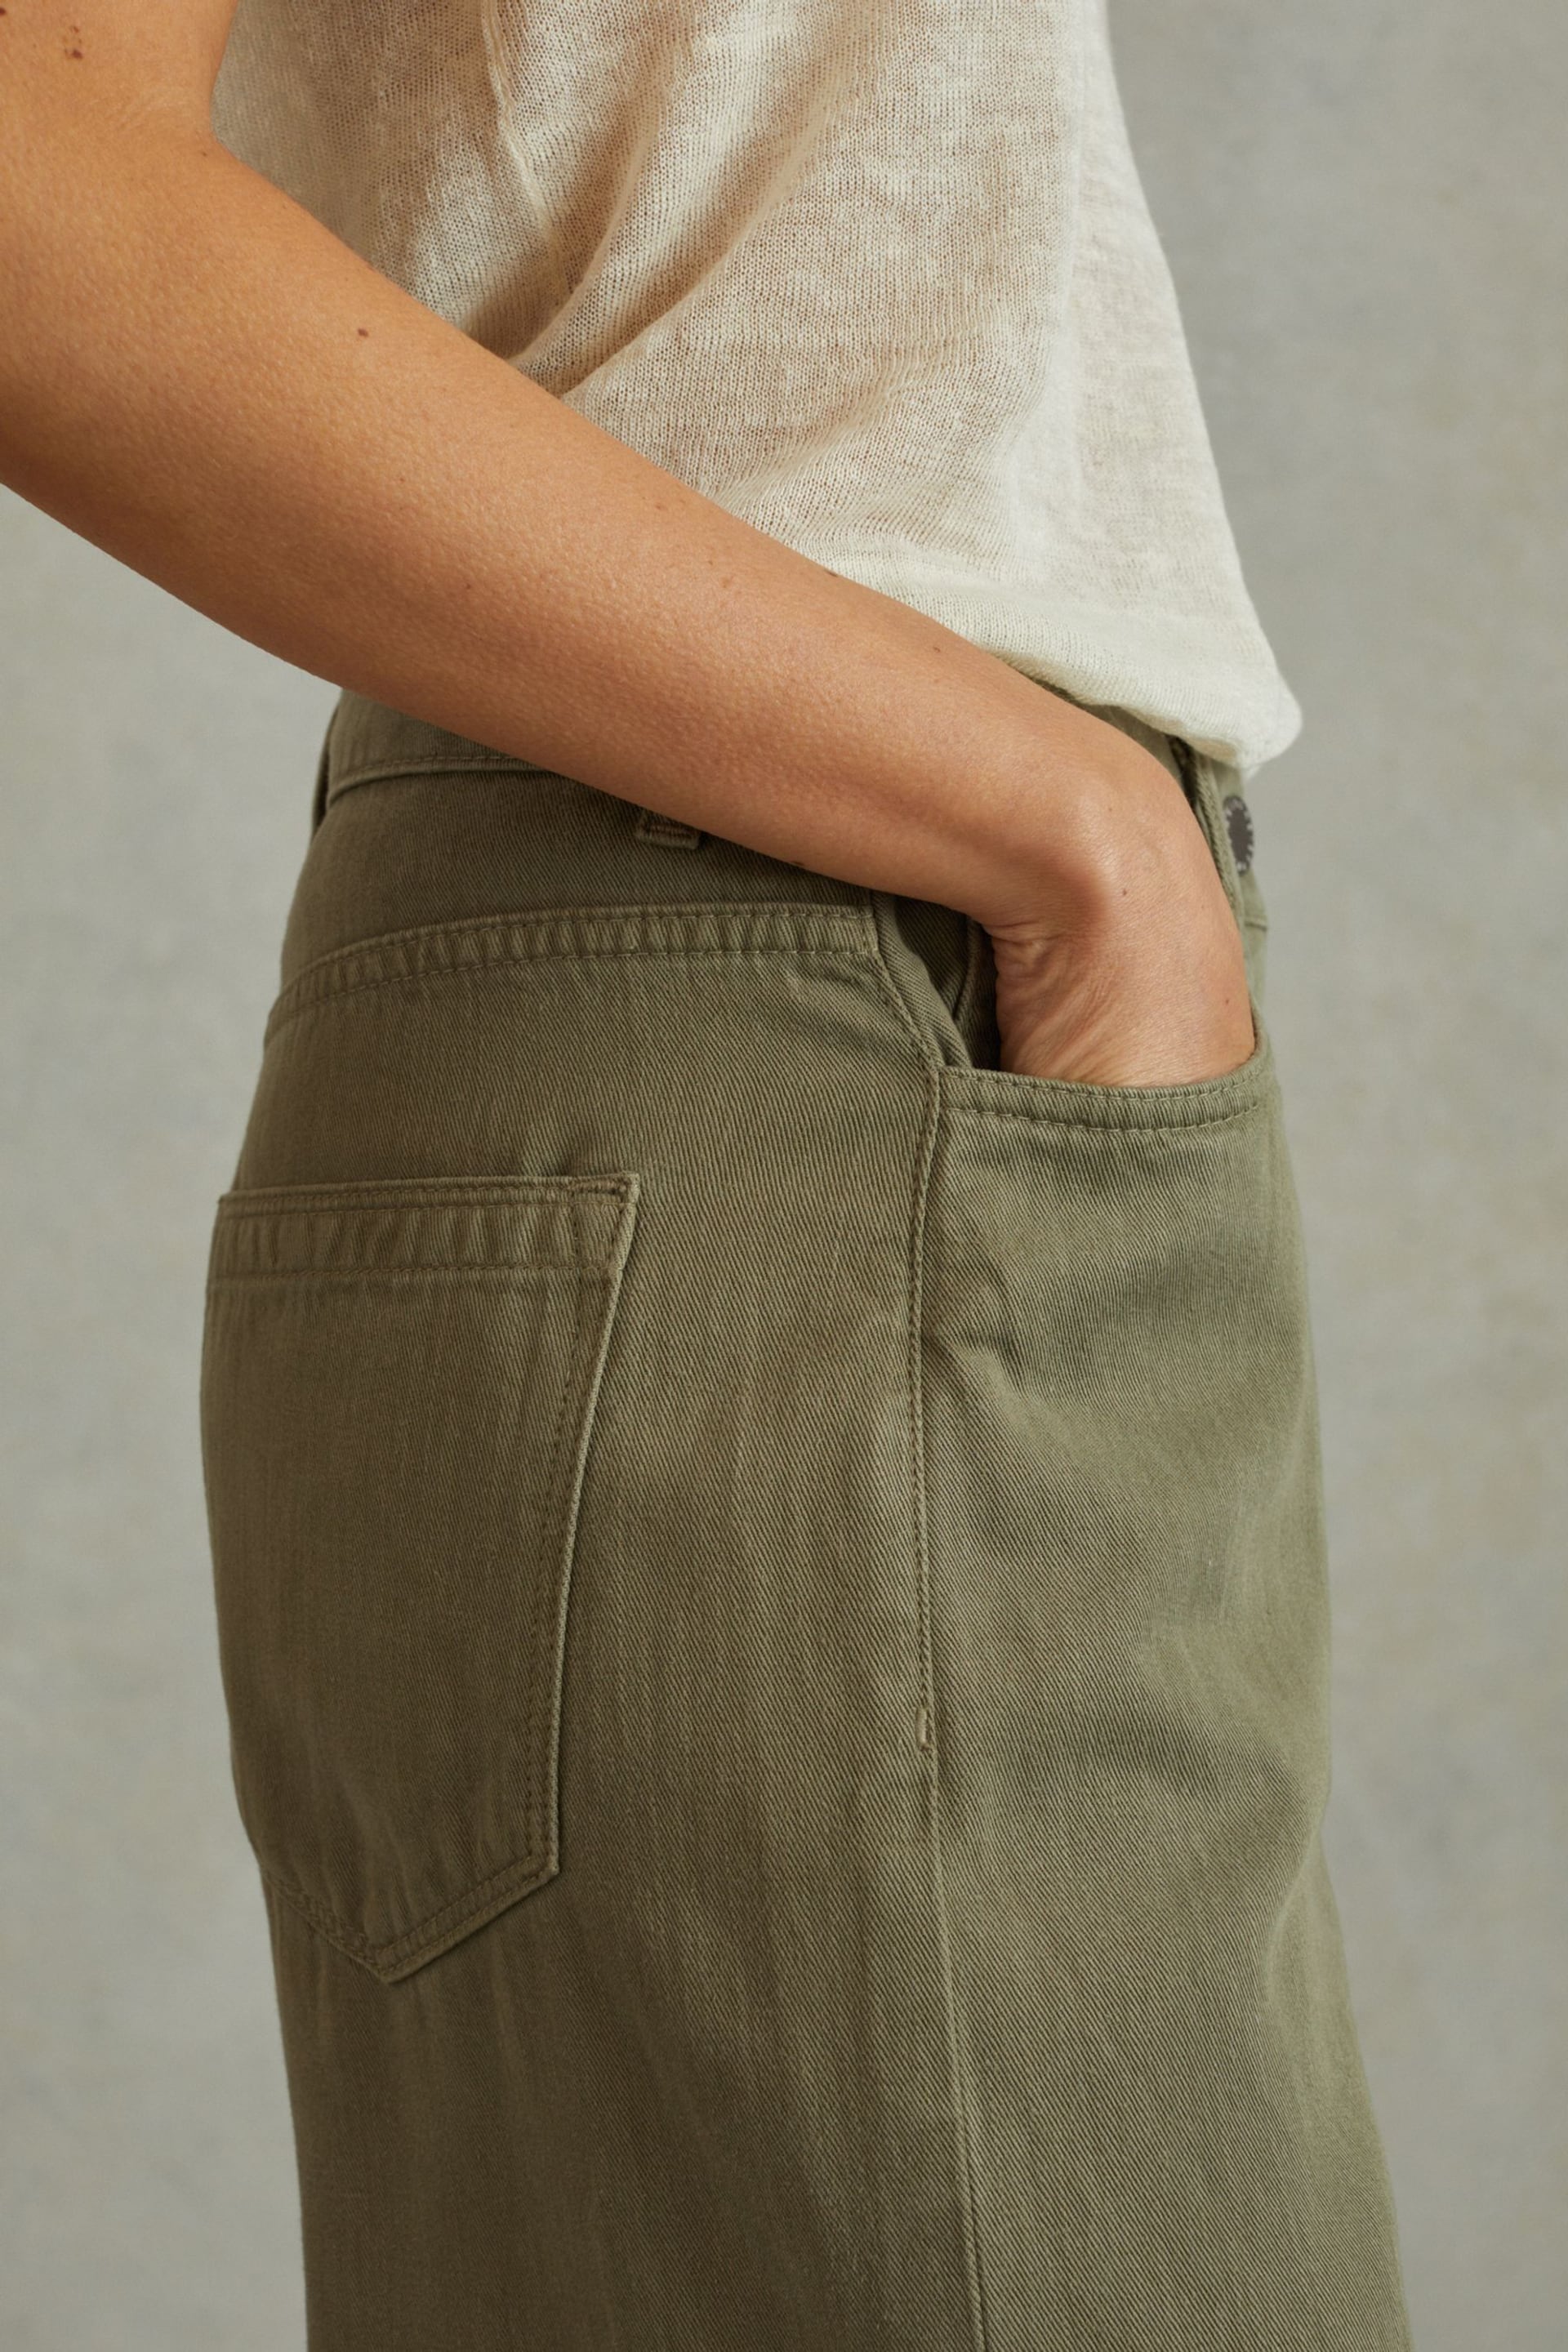 Reiss Khaki Colorado Garment Dyed Wide Leg Trousers - Image 3 of 5